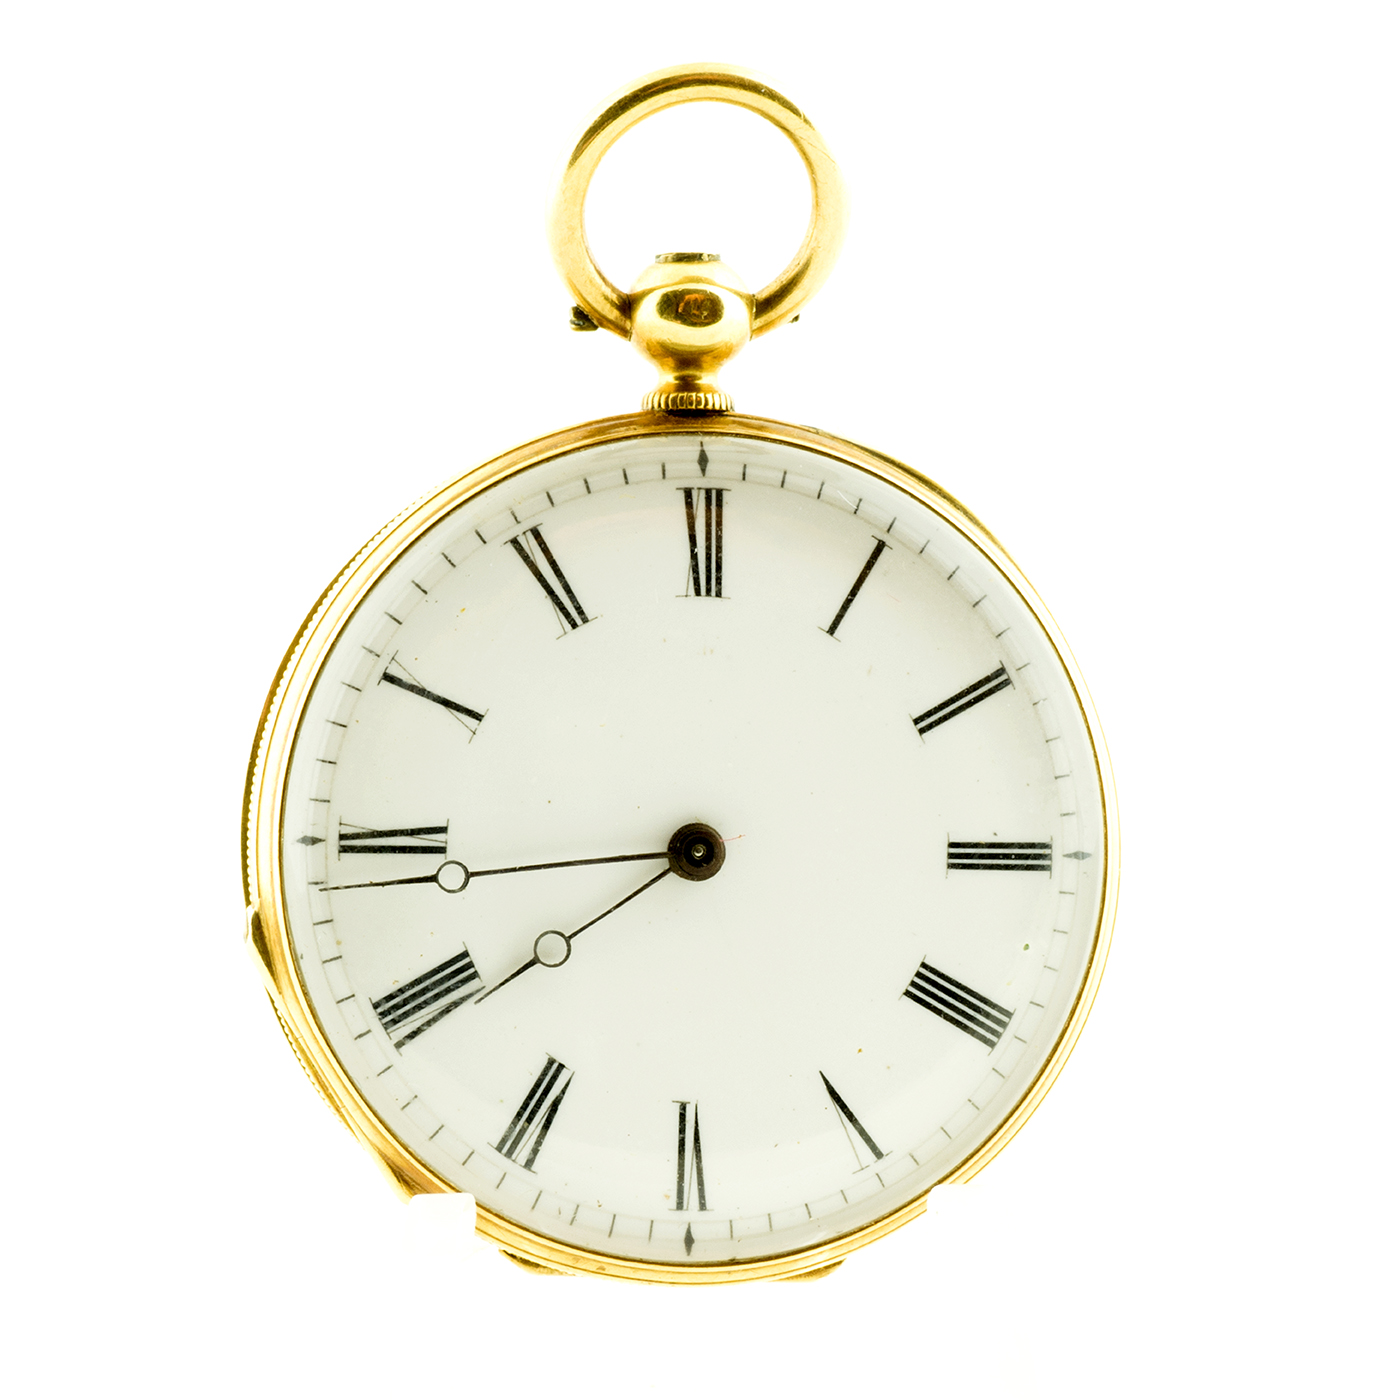 Eugene Bornand. Pocket watch - hang up, lepine. 19th century. 18k gold.